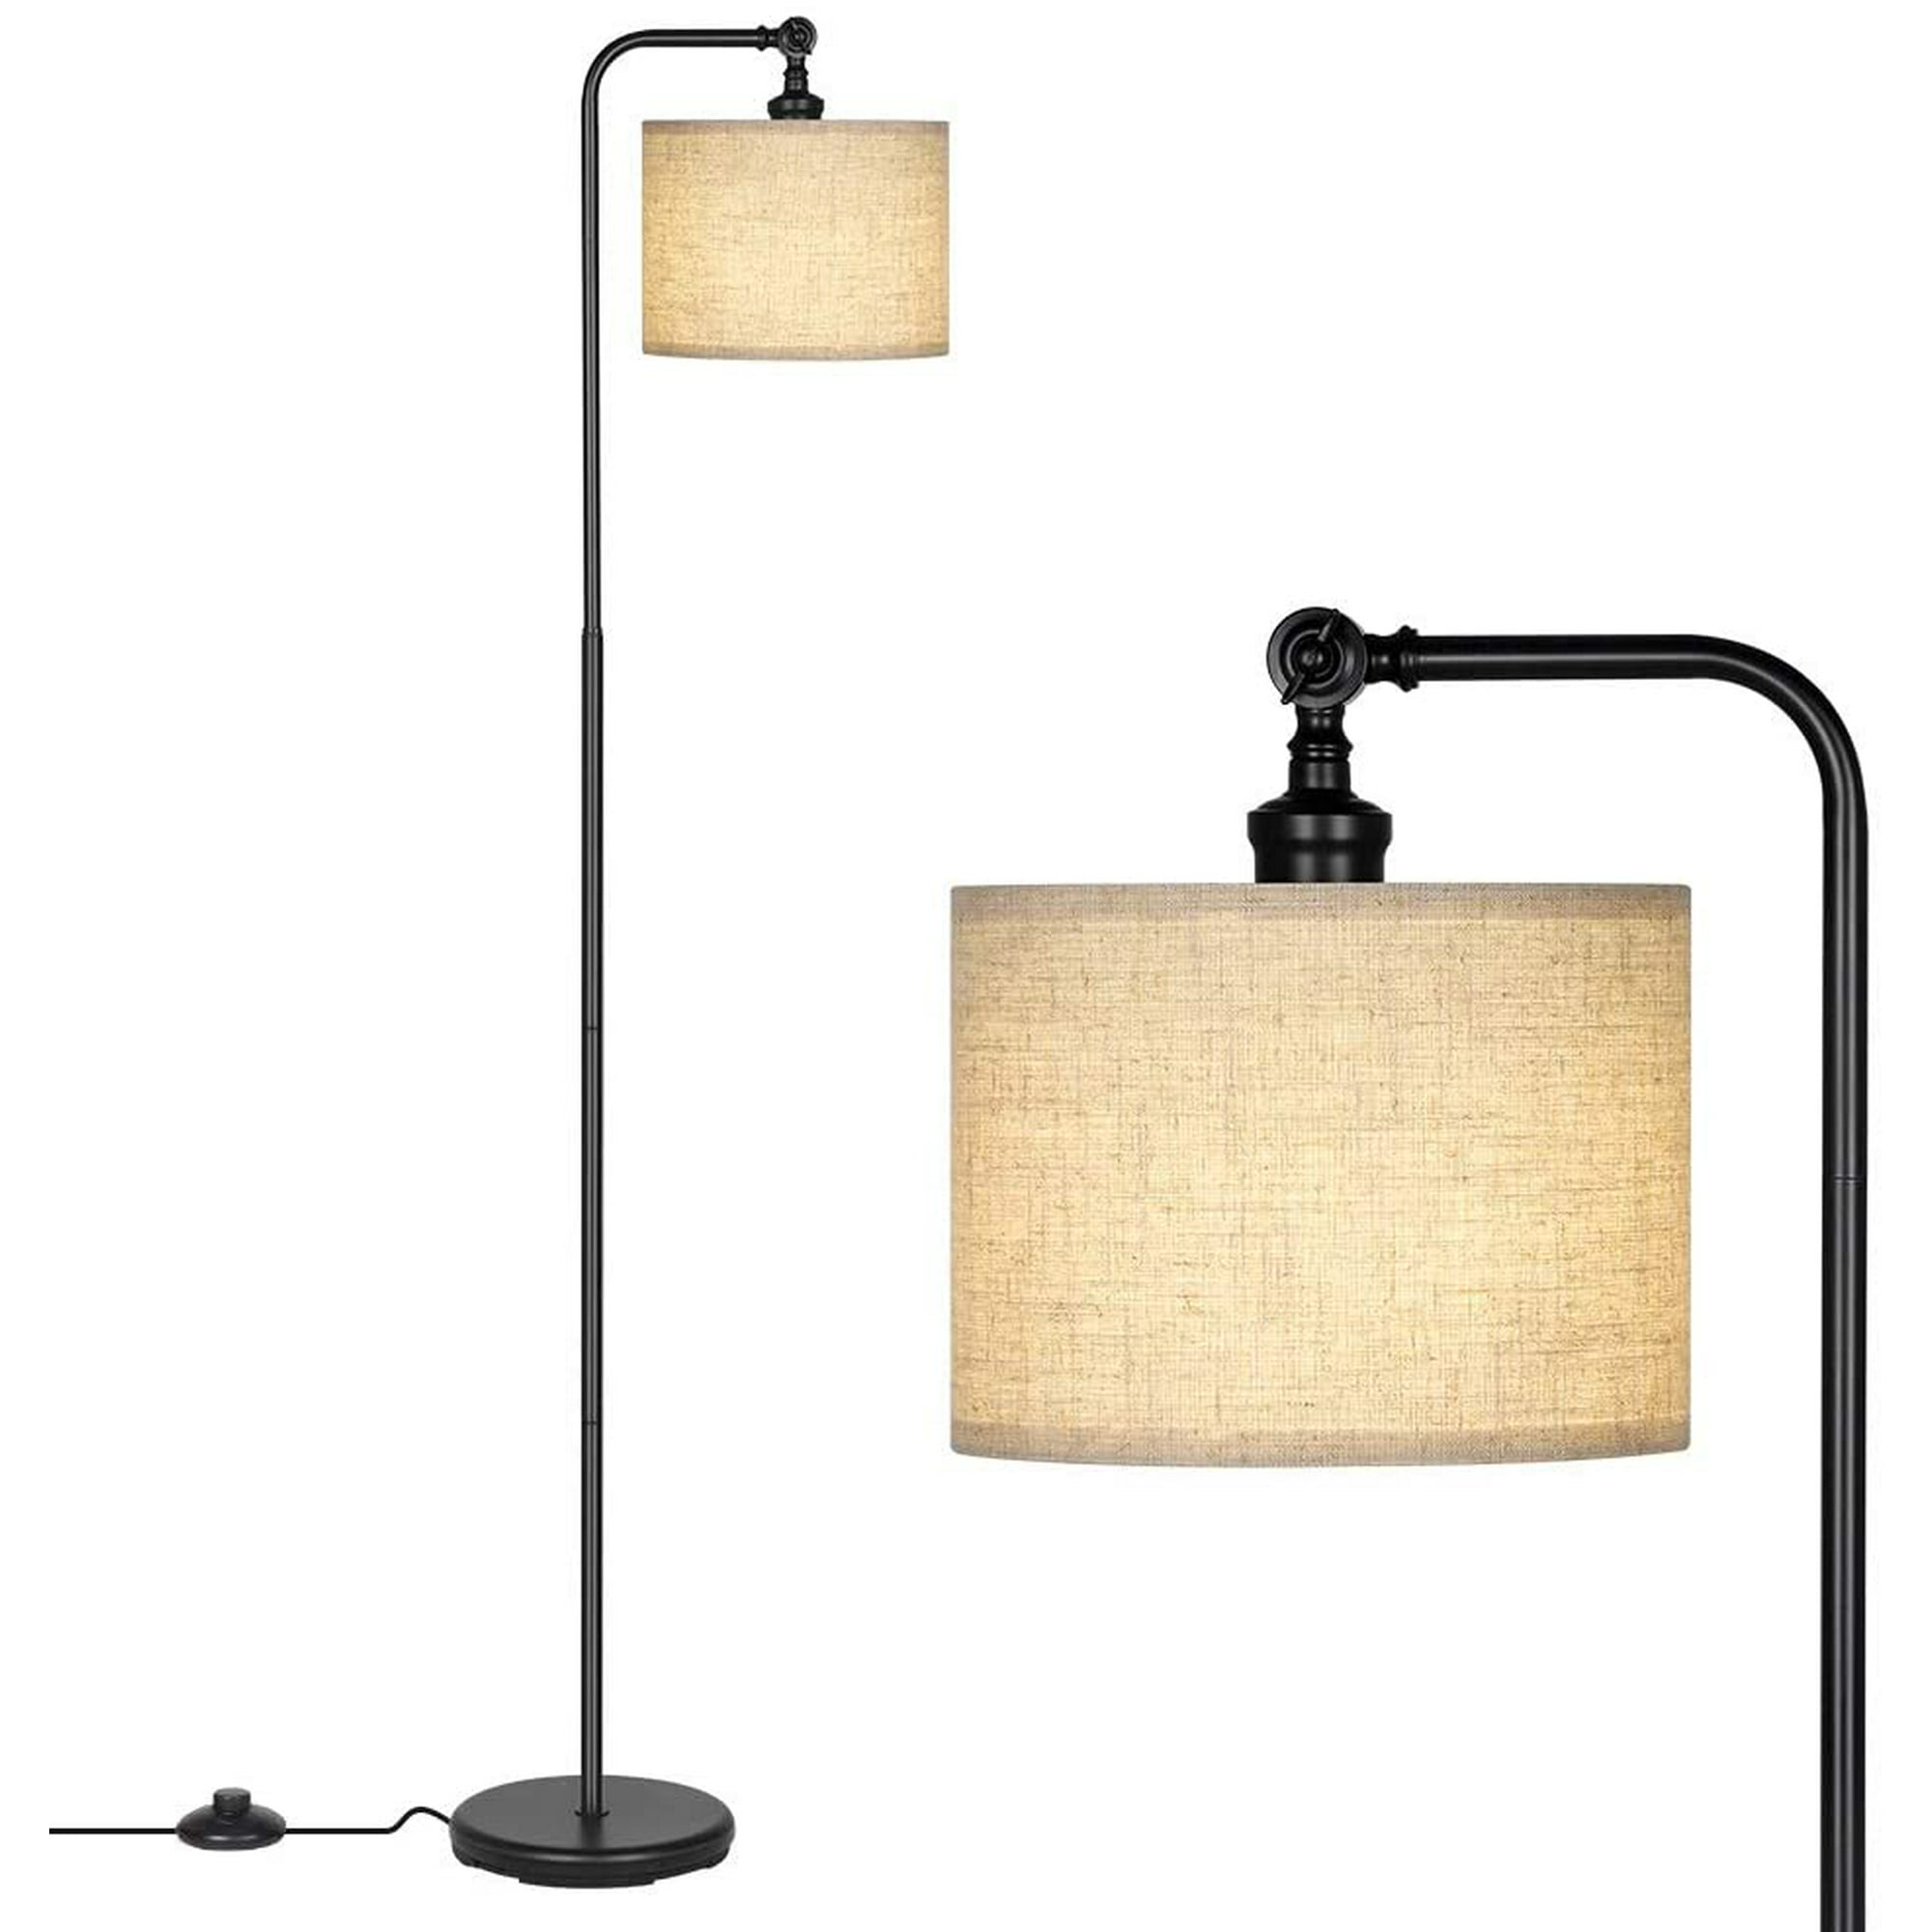 Wgthhk Modern Black Floor Lamp With, Tall Skinny Black Table Lamp